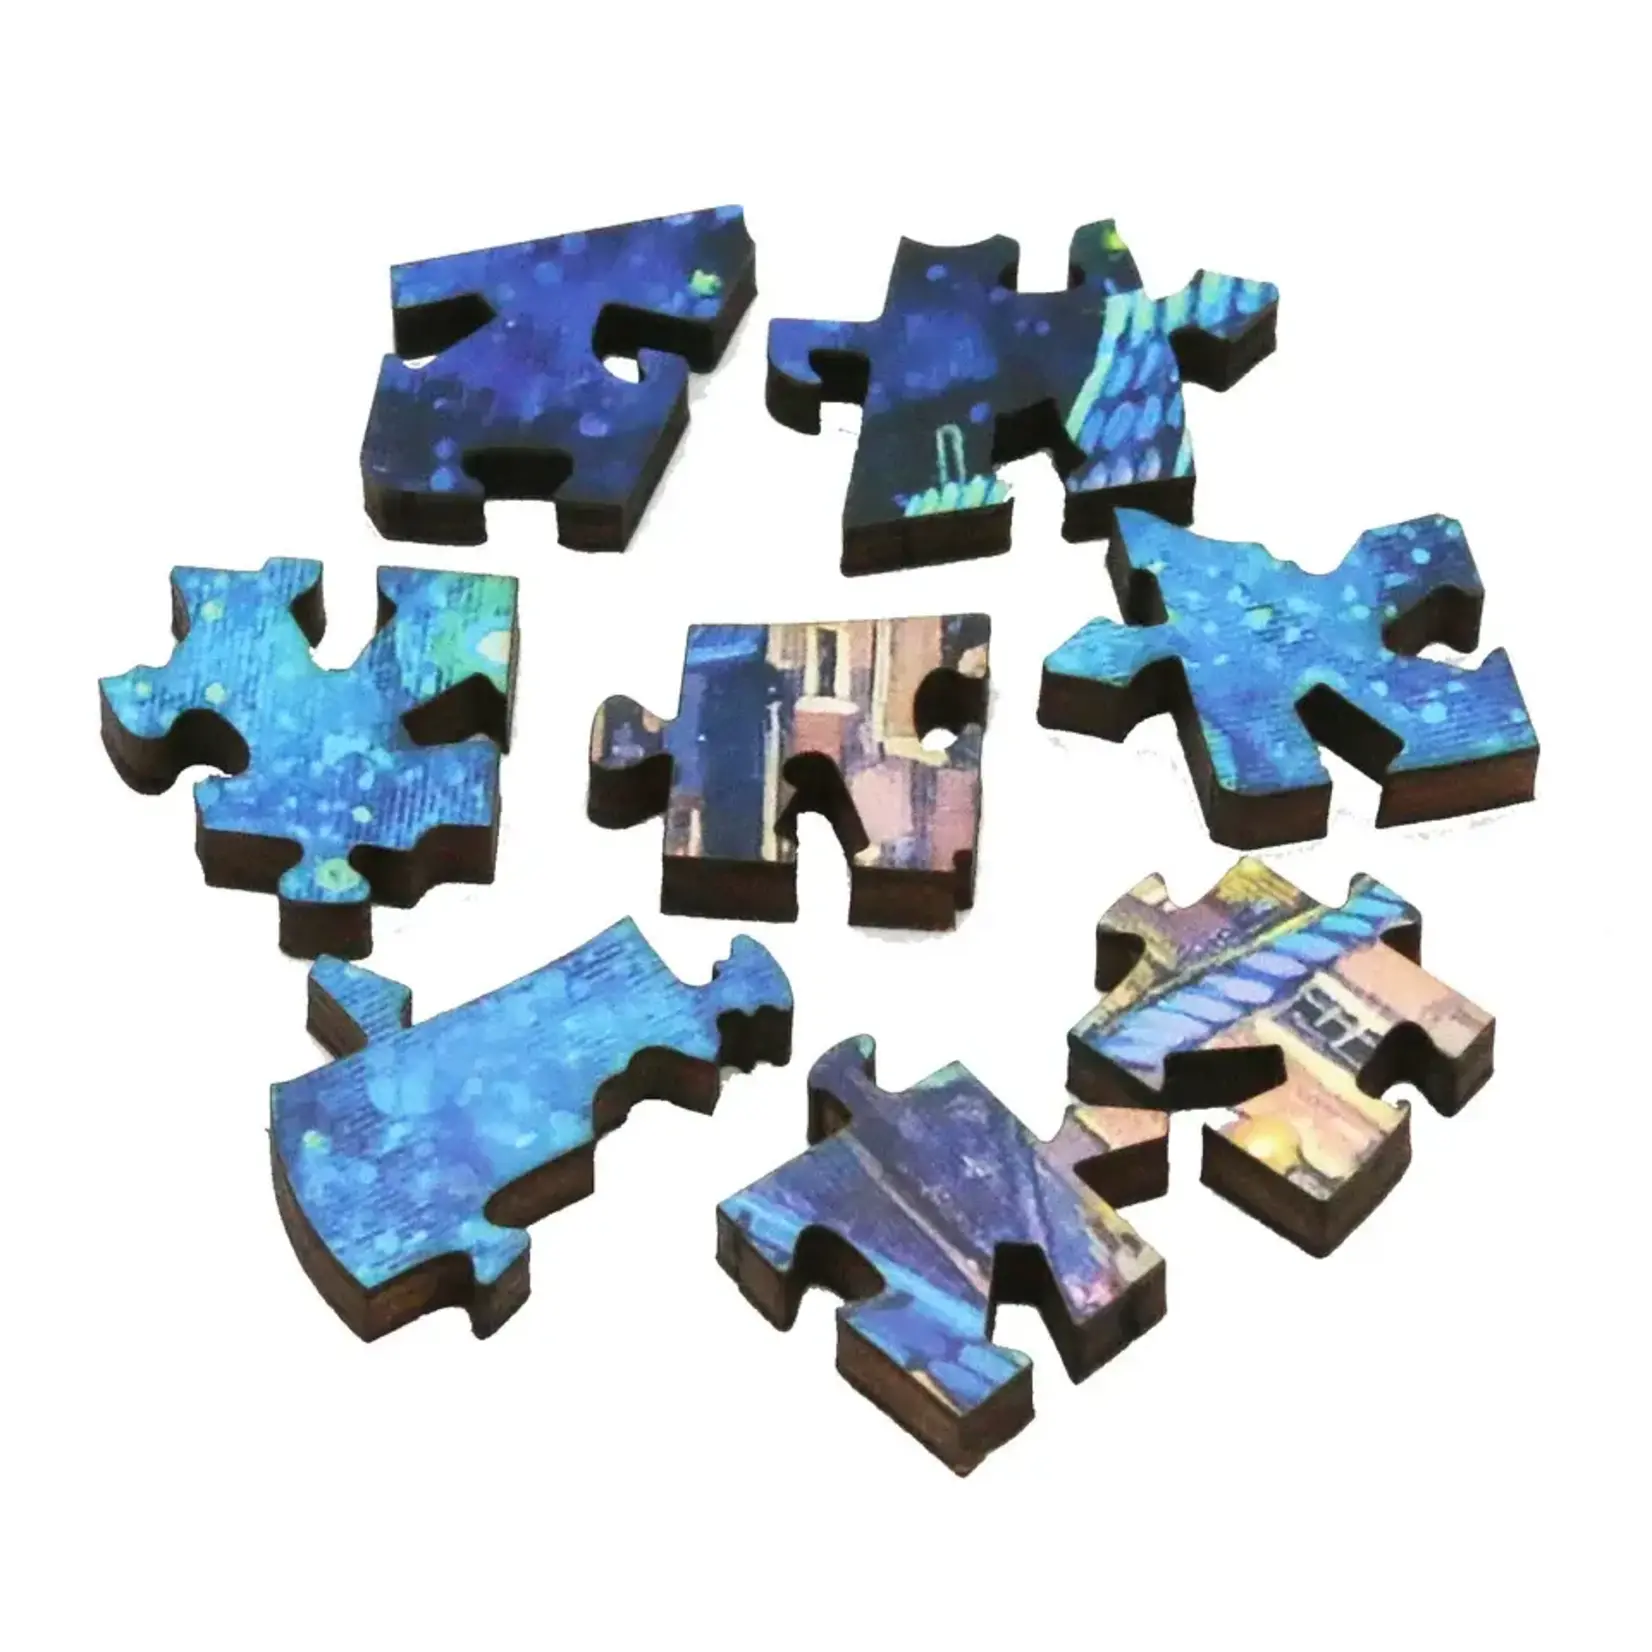 Artifact Puzzles Night Concert by Roch Urbaniak, 393-Piece Wooden Jigsaw Puzzle